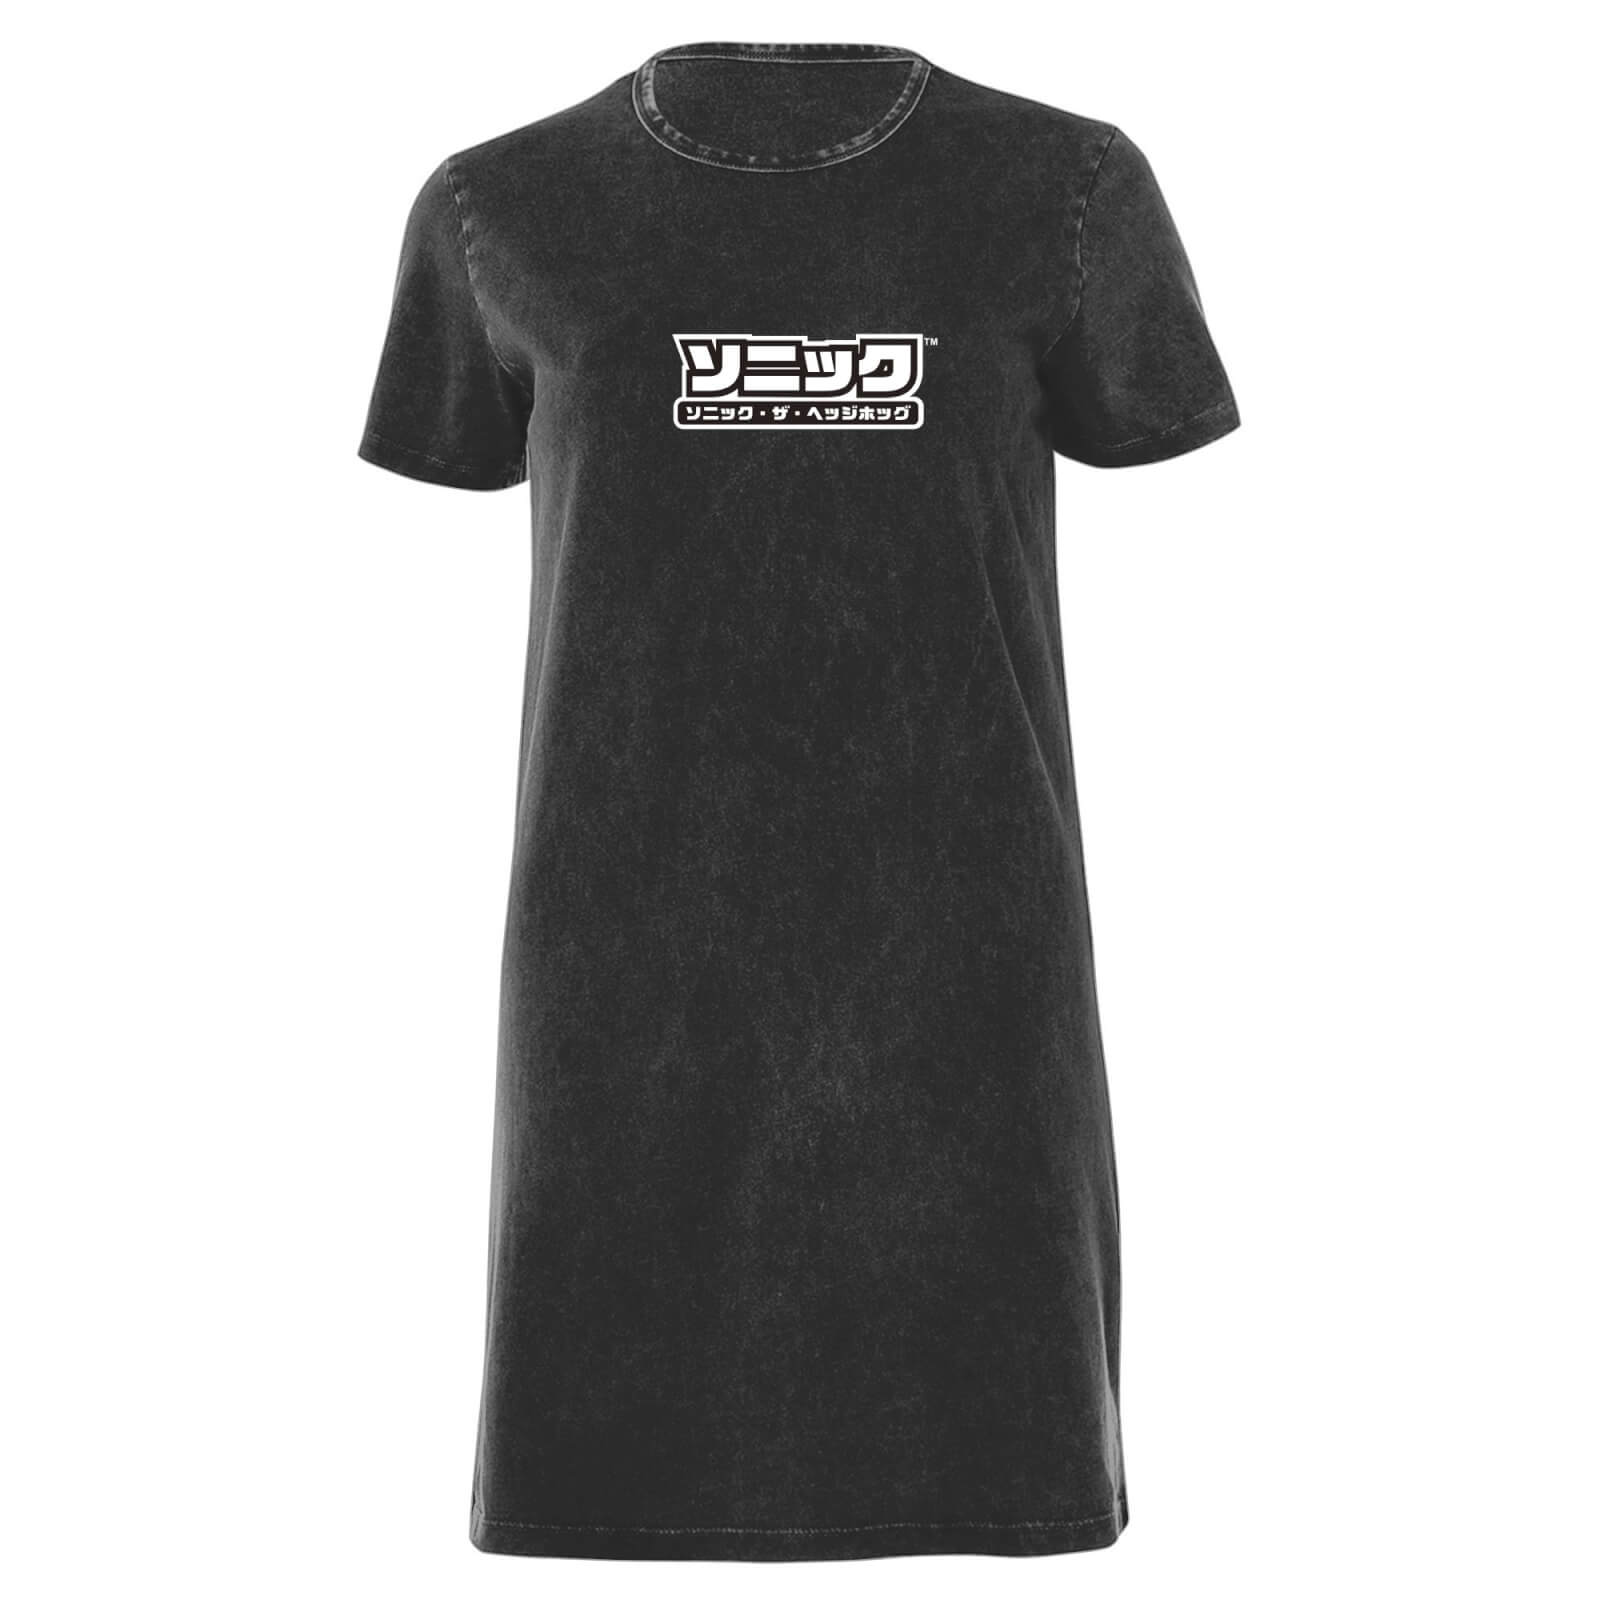 Sega Start Screen Women's T-Shirt Dress - Black Acid Wash - S - Black Acid Wash